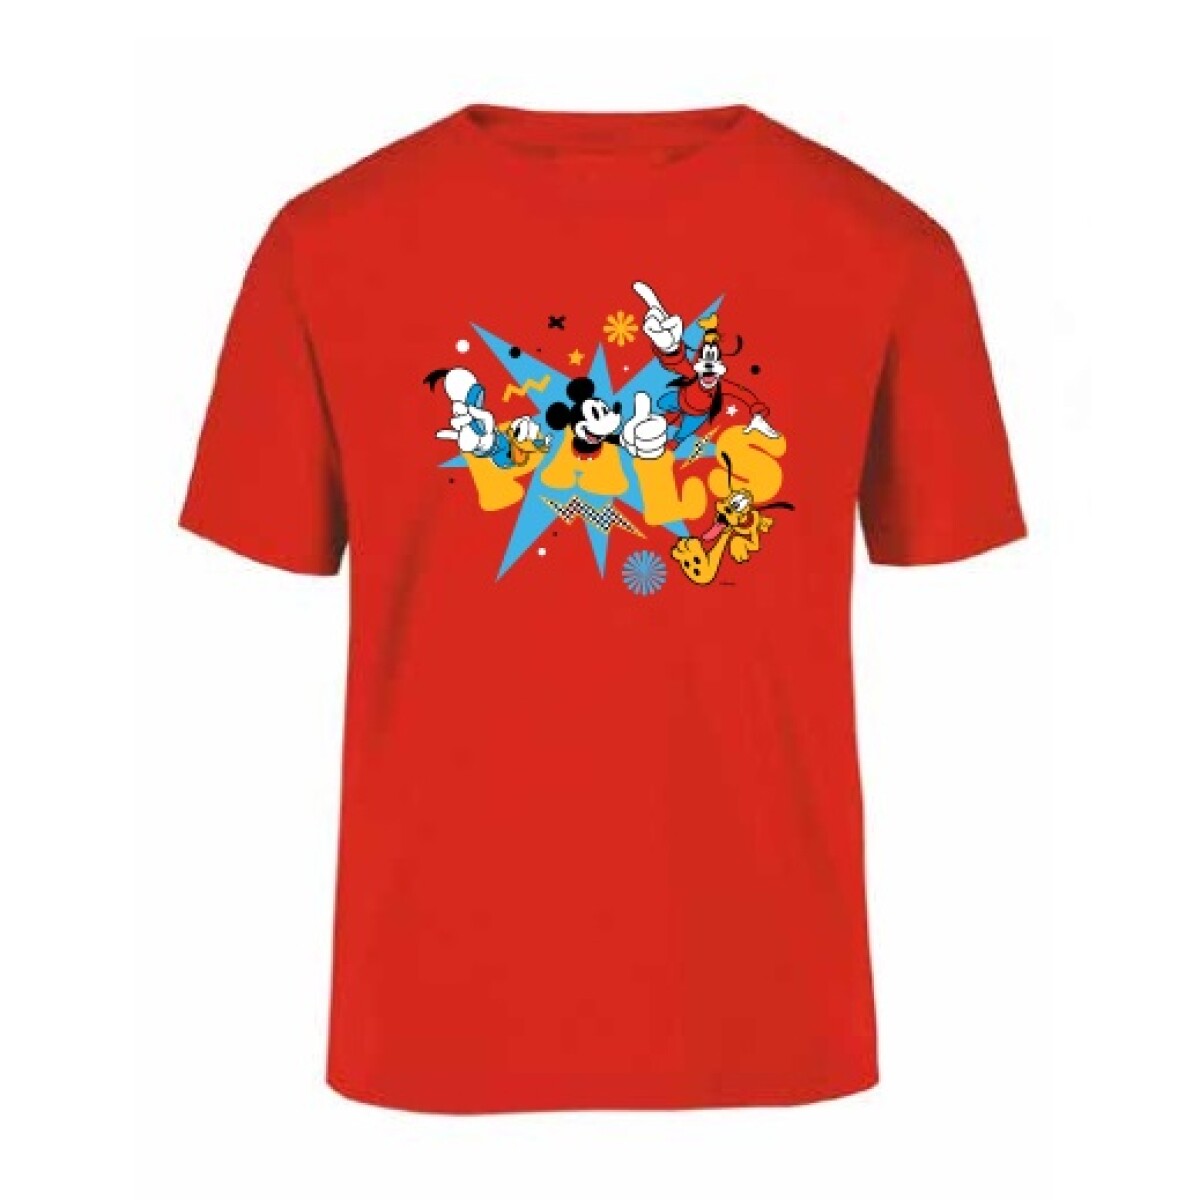 Camiseta Remera Infantil Disney Pals - ROJO 